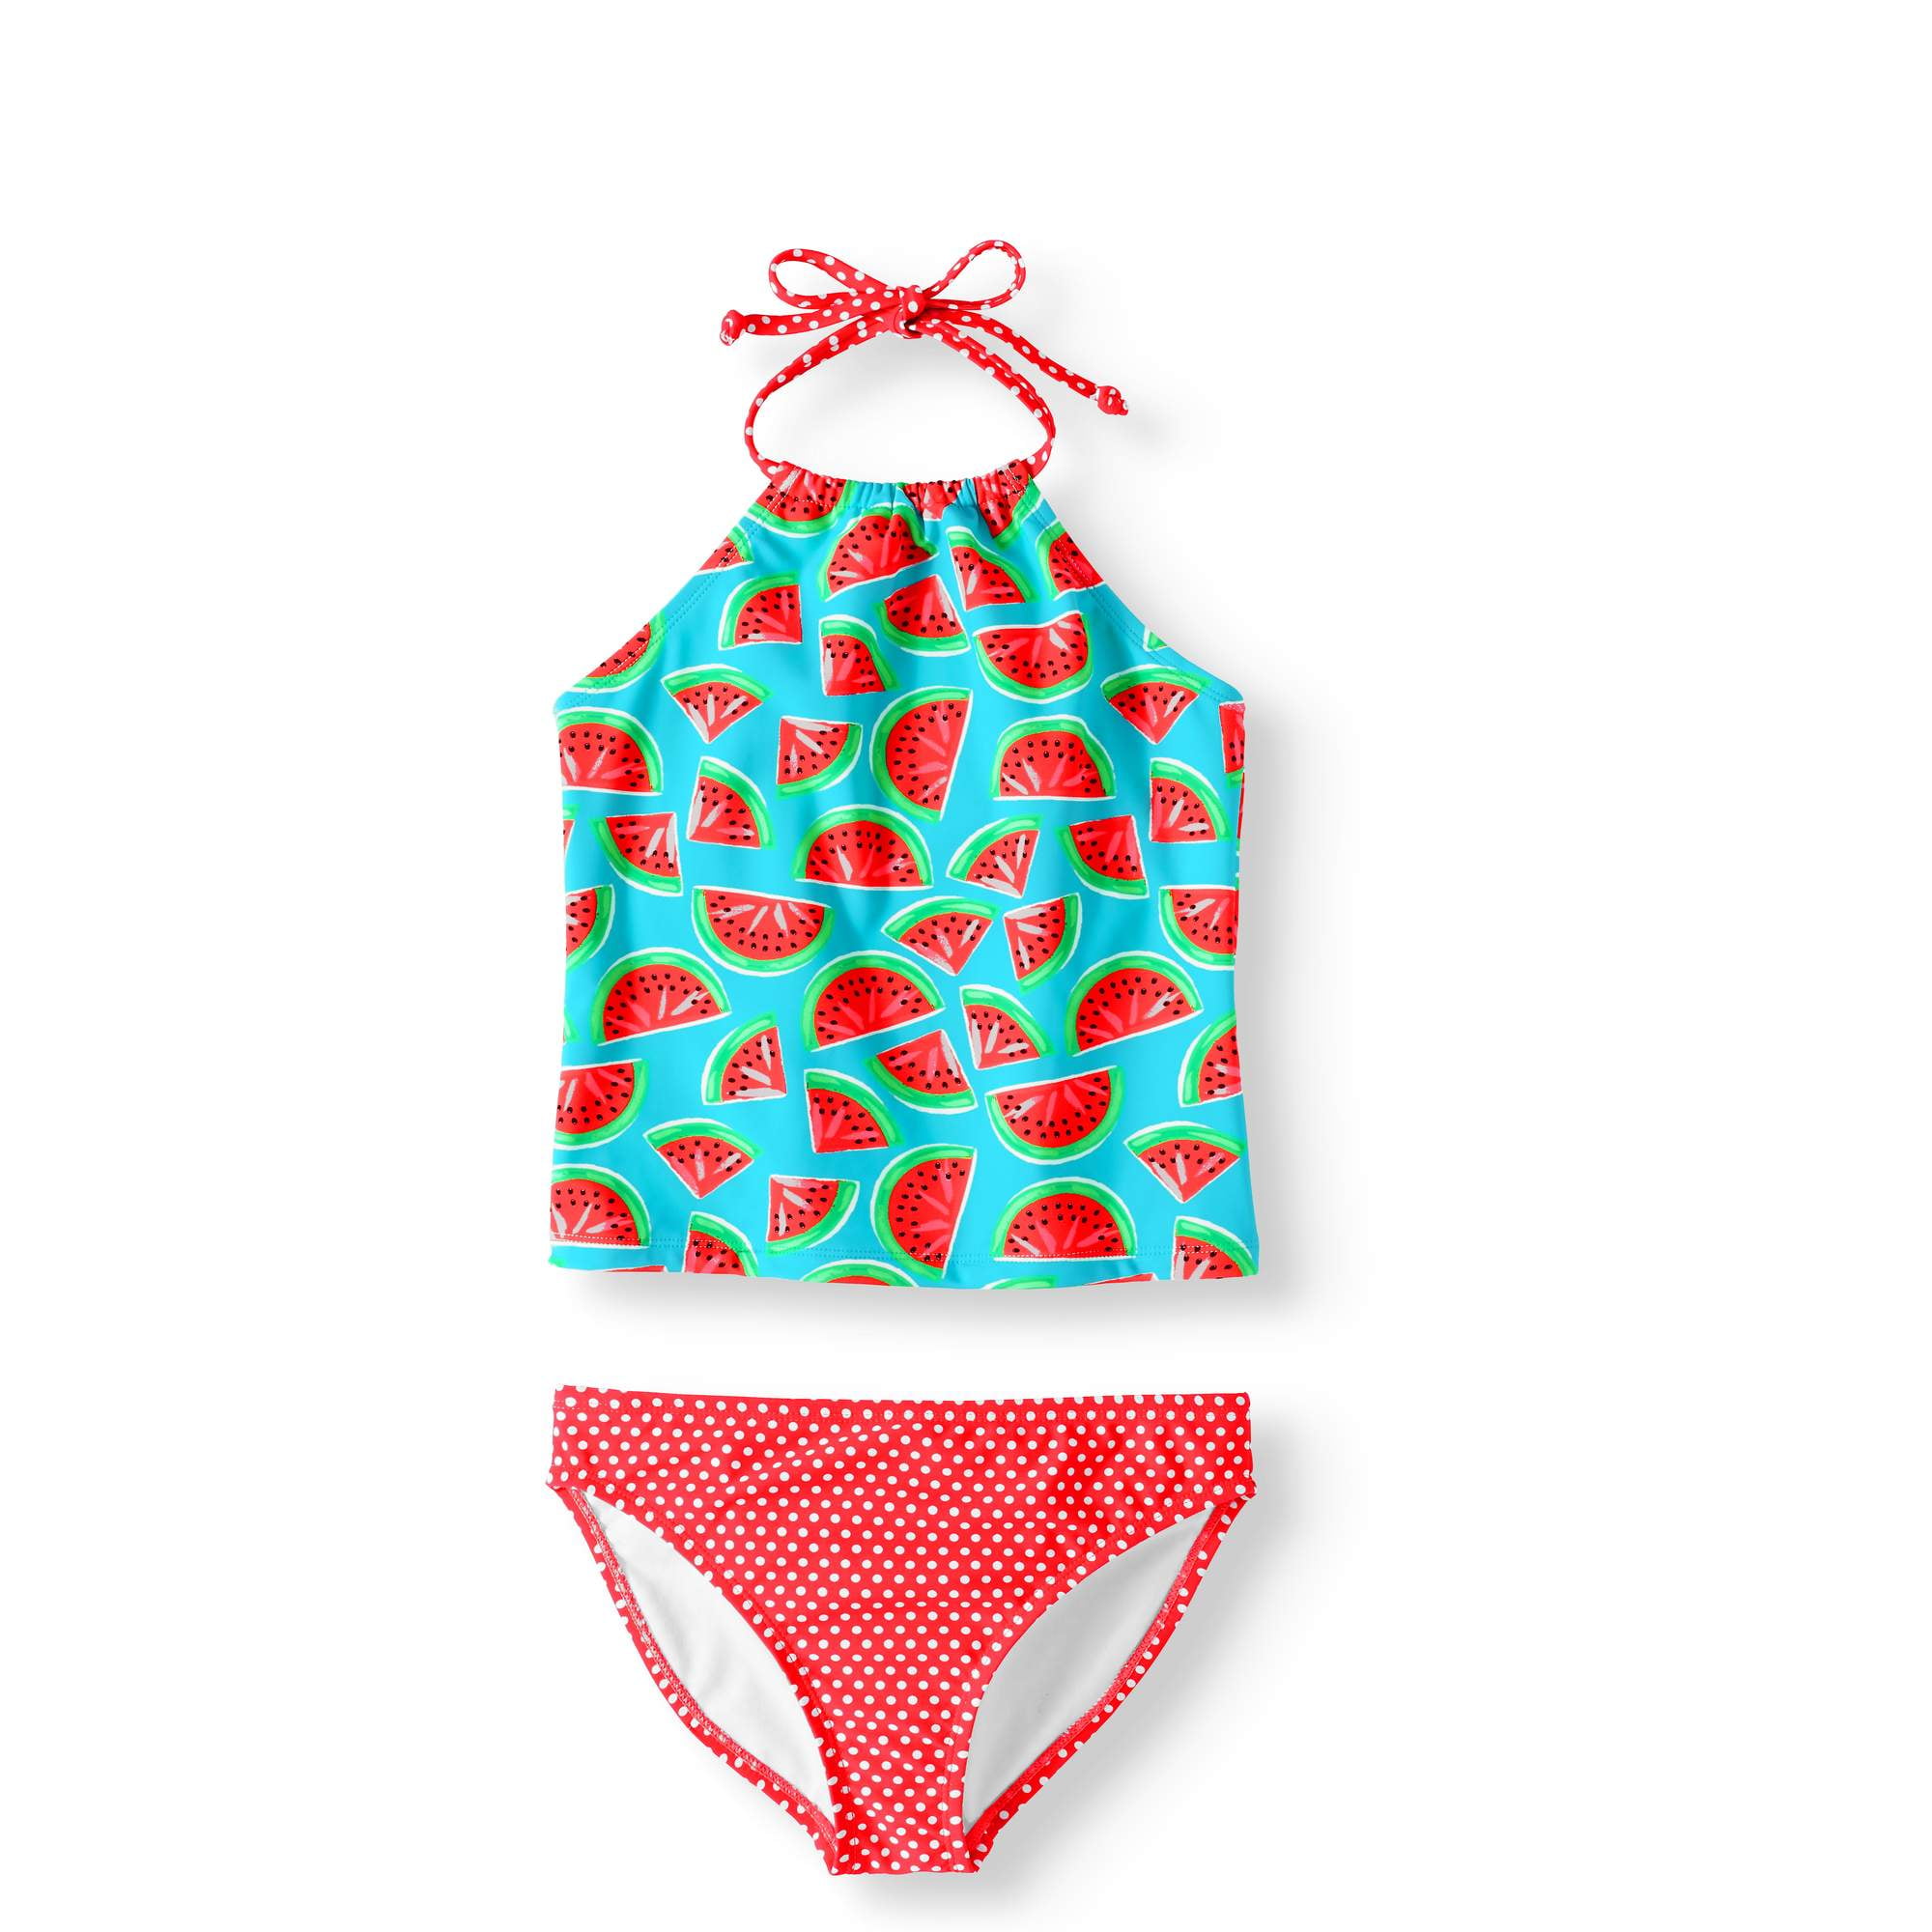 Cuekondy Toddler Kids Baby Girl Watermelon Lemon Print Bikini Swimsuit Set Halter Swimwear Tops+Shorts Bathing Suit 2pc